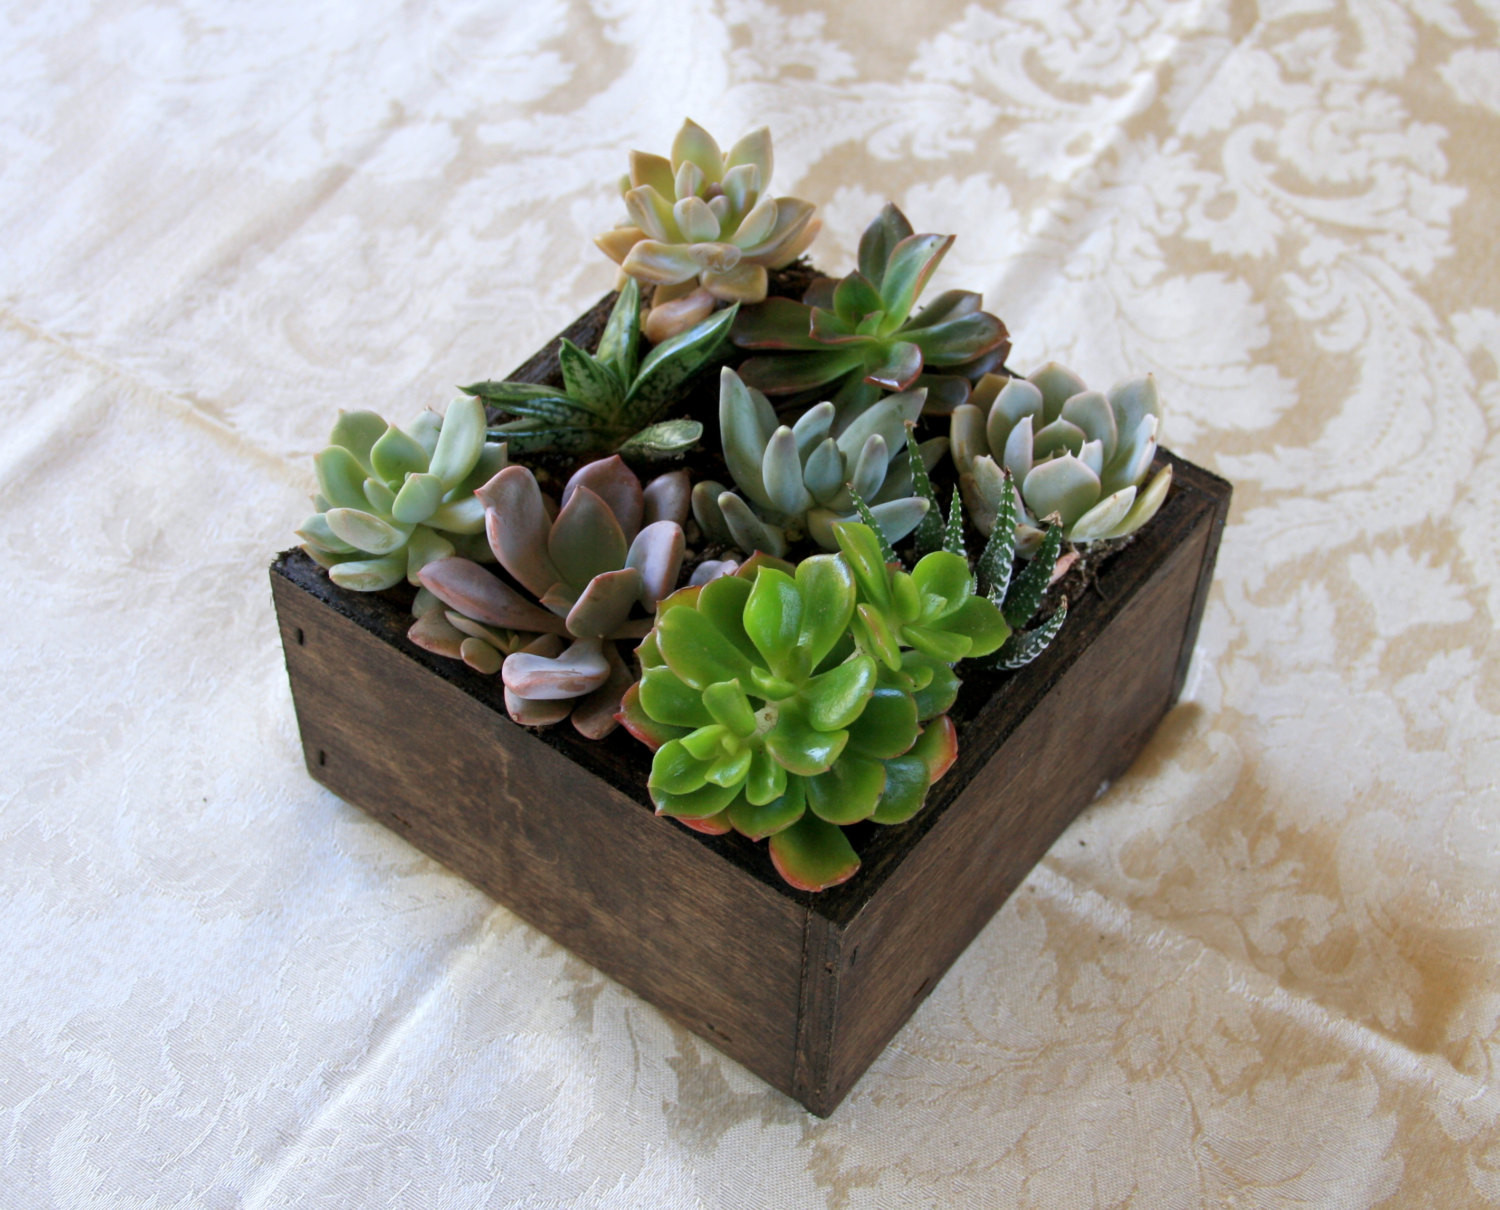 Best ideas about Succulent Planter Box
. Save or Pin Wooden Box Succulent Planter Centerpiece Now.